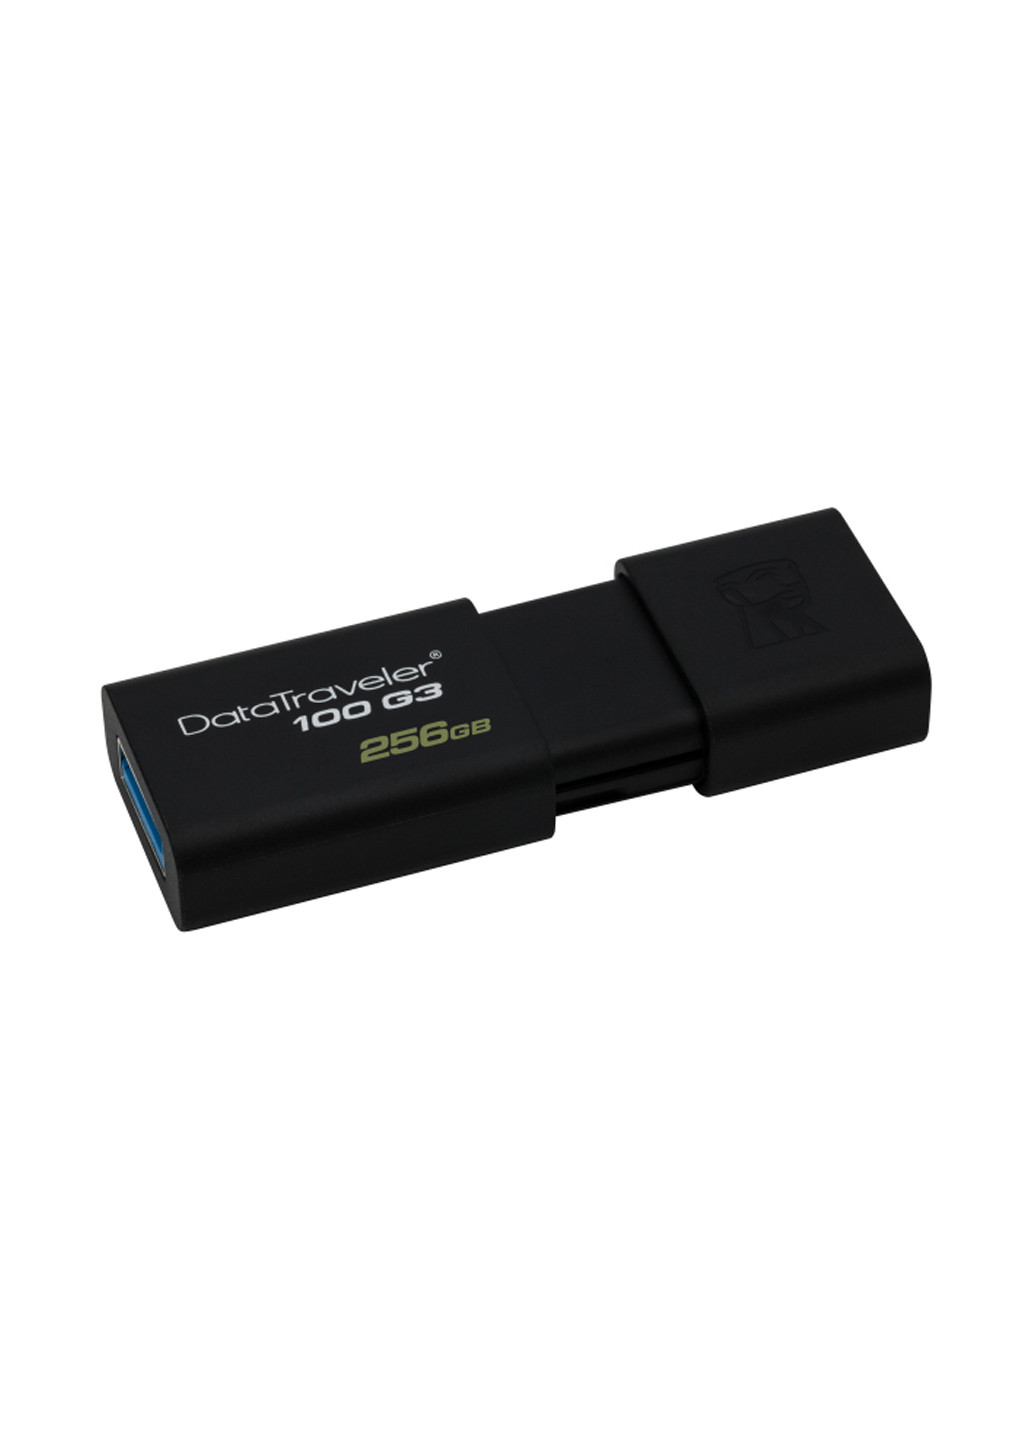 Флеш память USB DataTraveler 100 G3 256GB USB 3.0 (DT100G3/256GB) Kingston флеш память usb kingston datatraveler 100 g3 256gb usb 3.0 (dt100g3/256gb) (136742825)